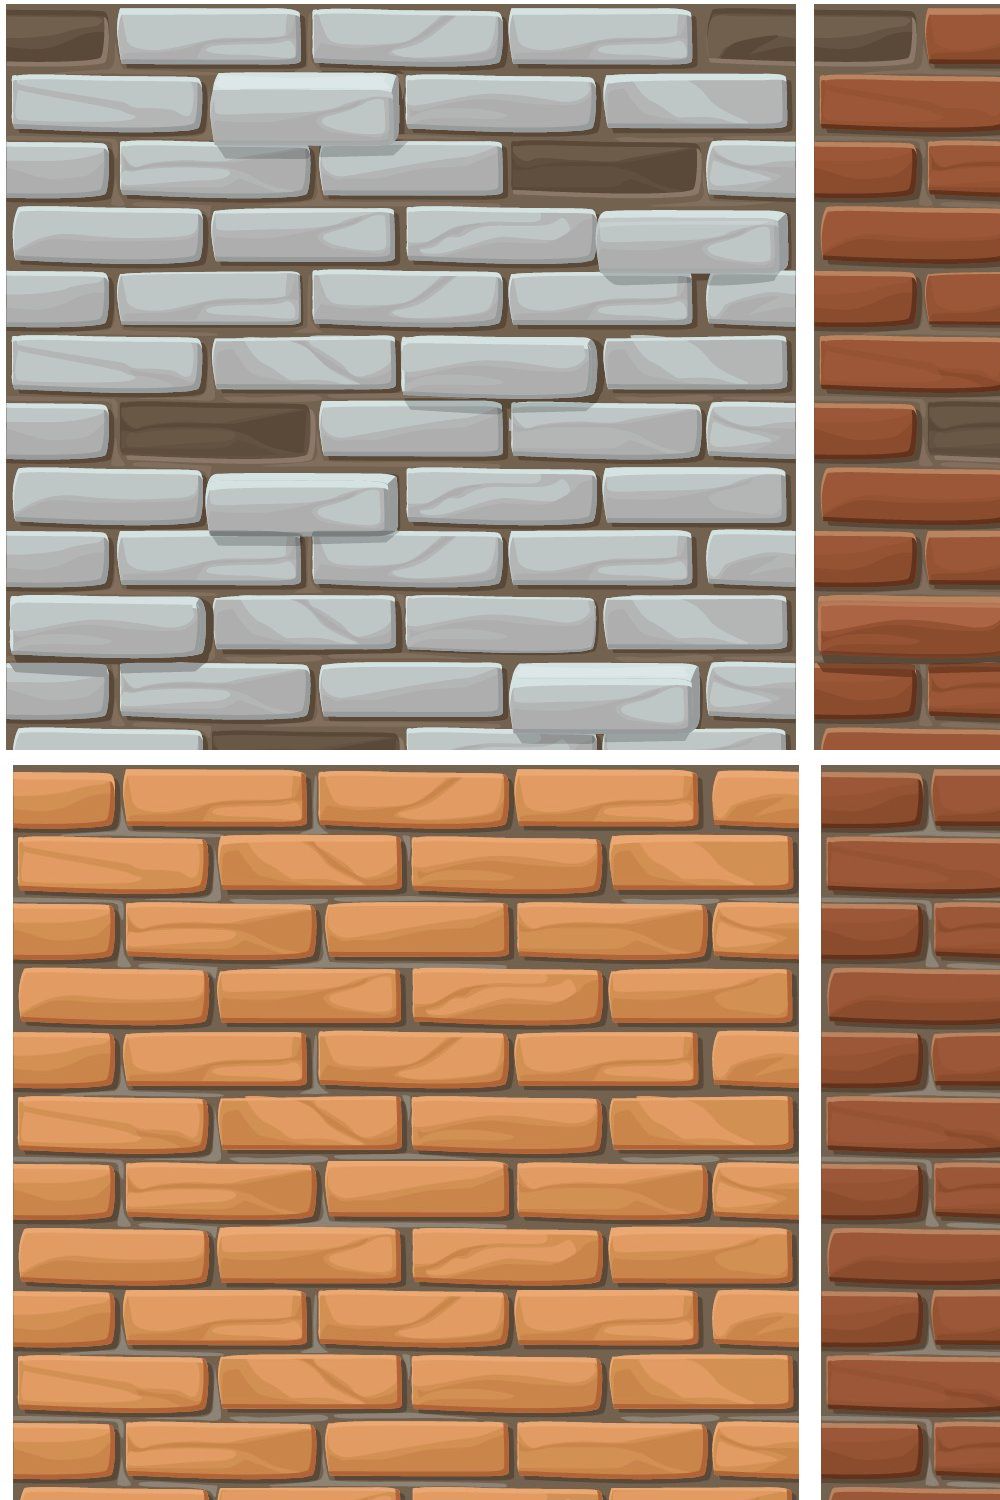 Set Brick wall texture seamless pinterest preview image.